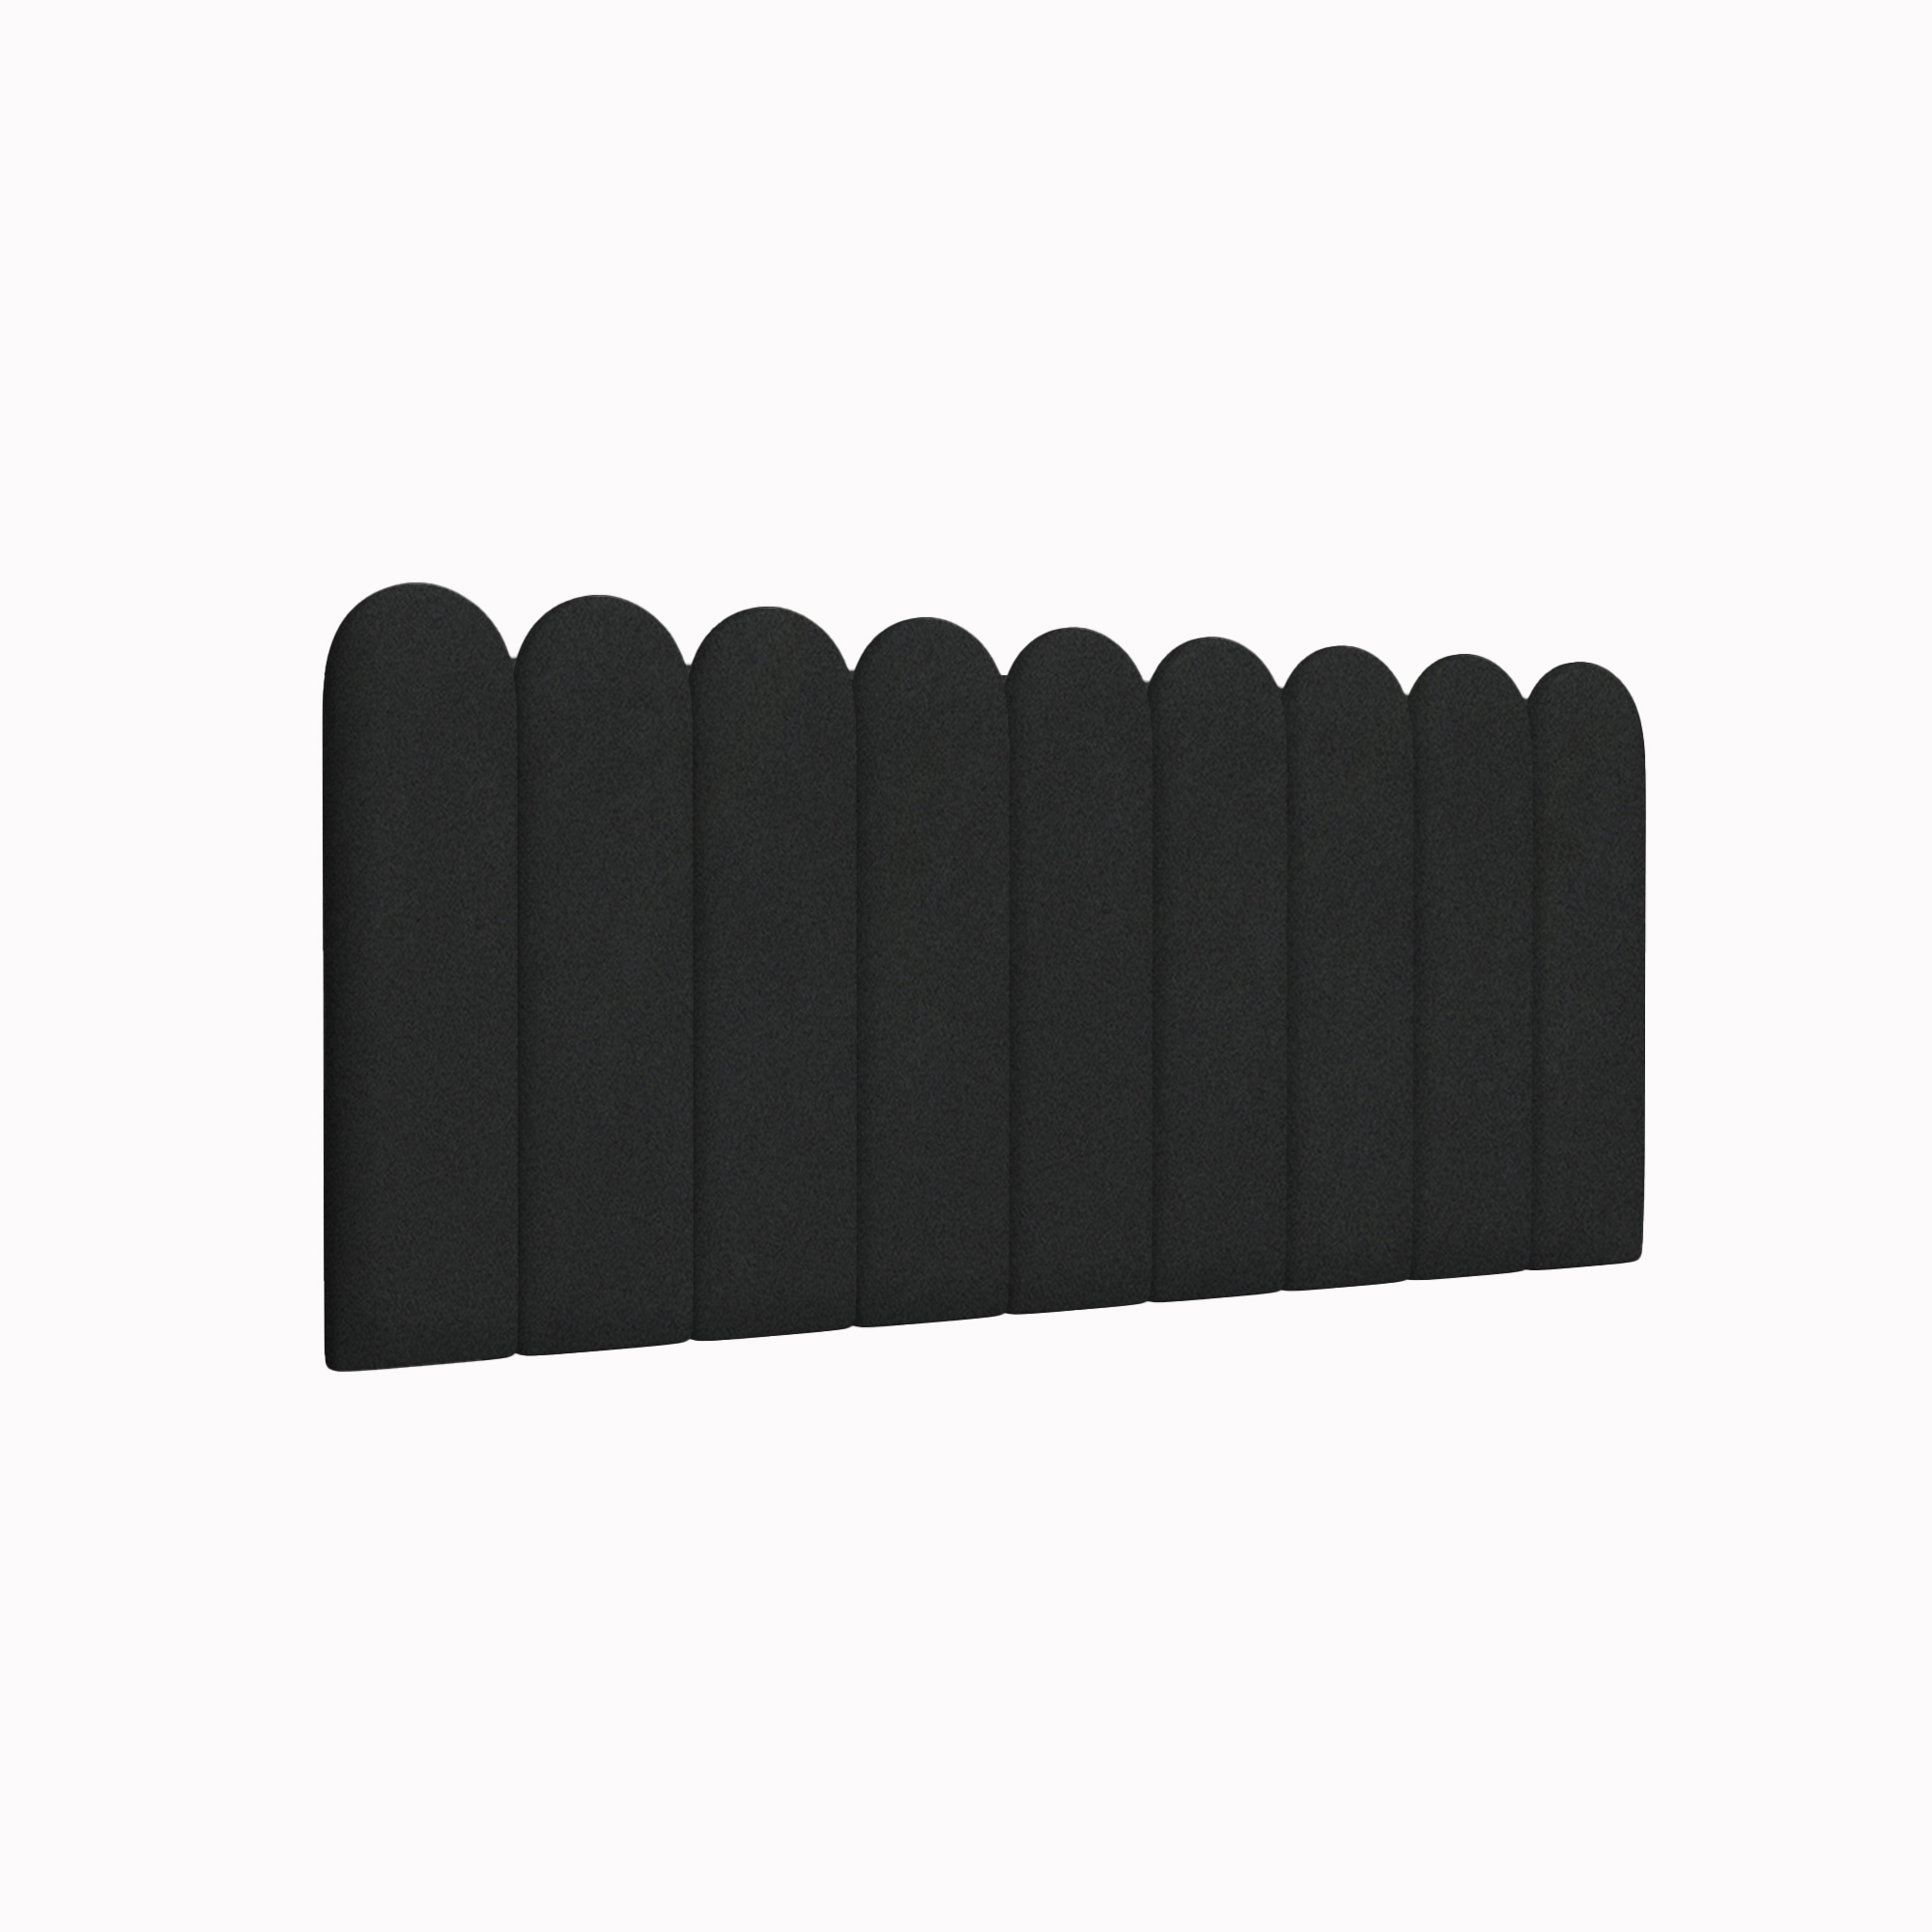 Мягкие стеновые панели Velour Black 15х60R см 4 шт.